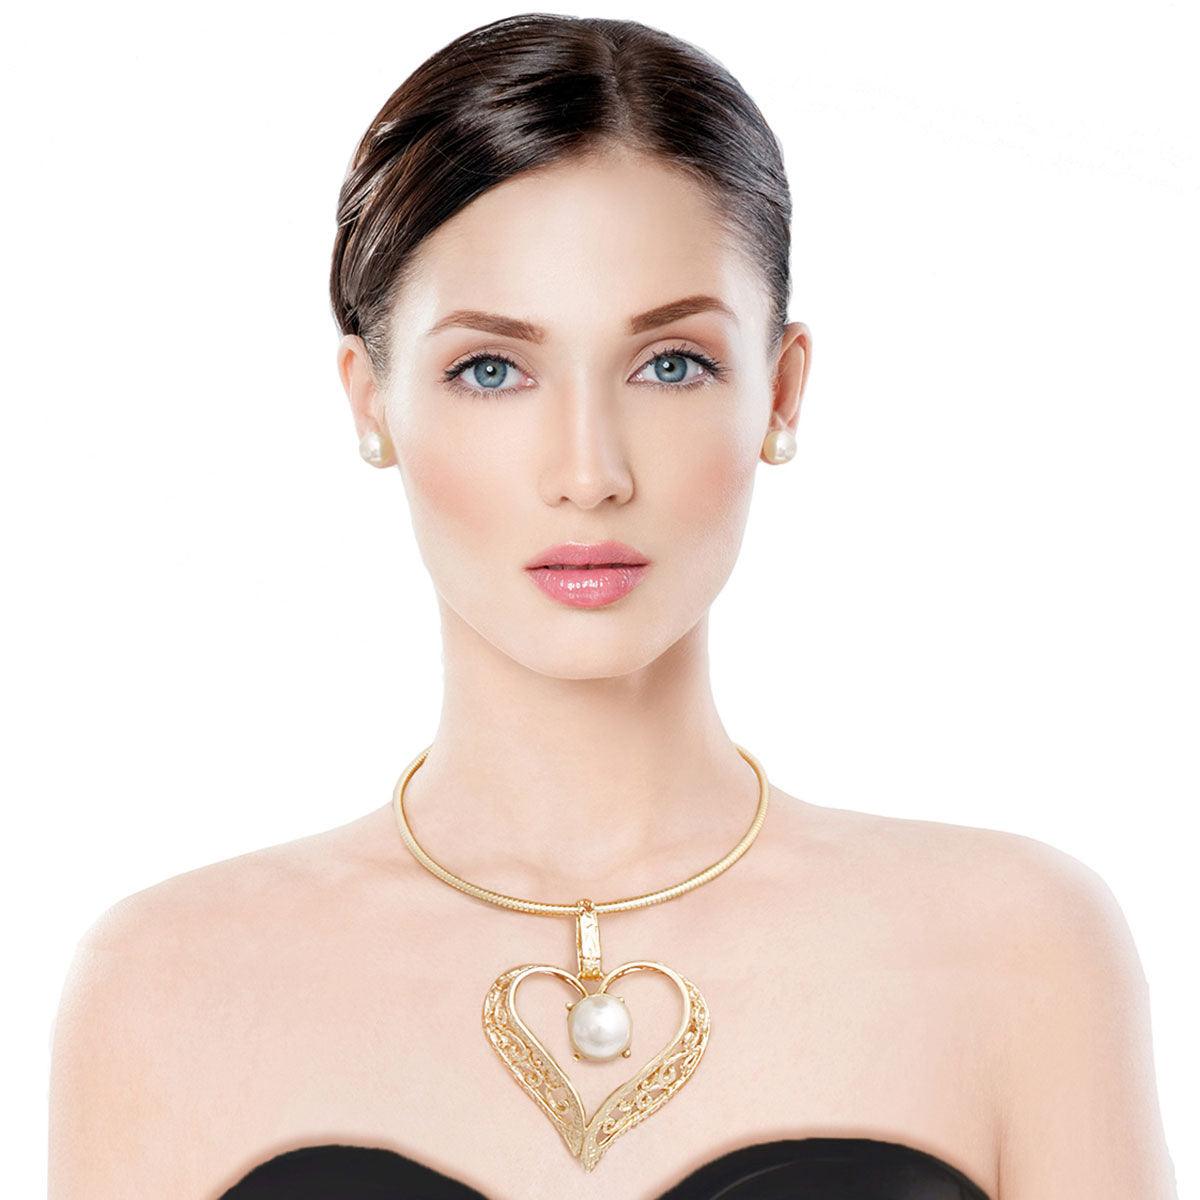 Modernist Open Heart Necklace Set Gold Plated